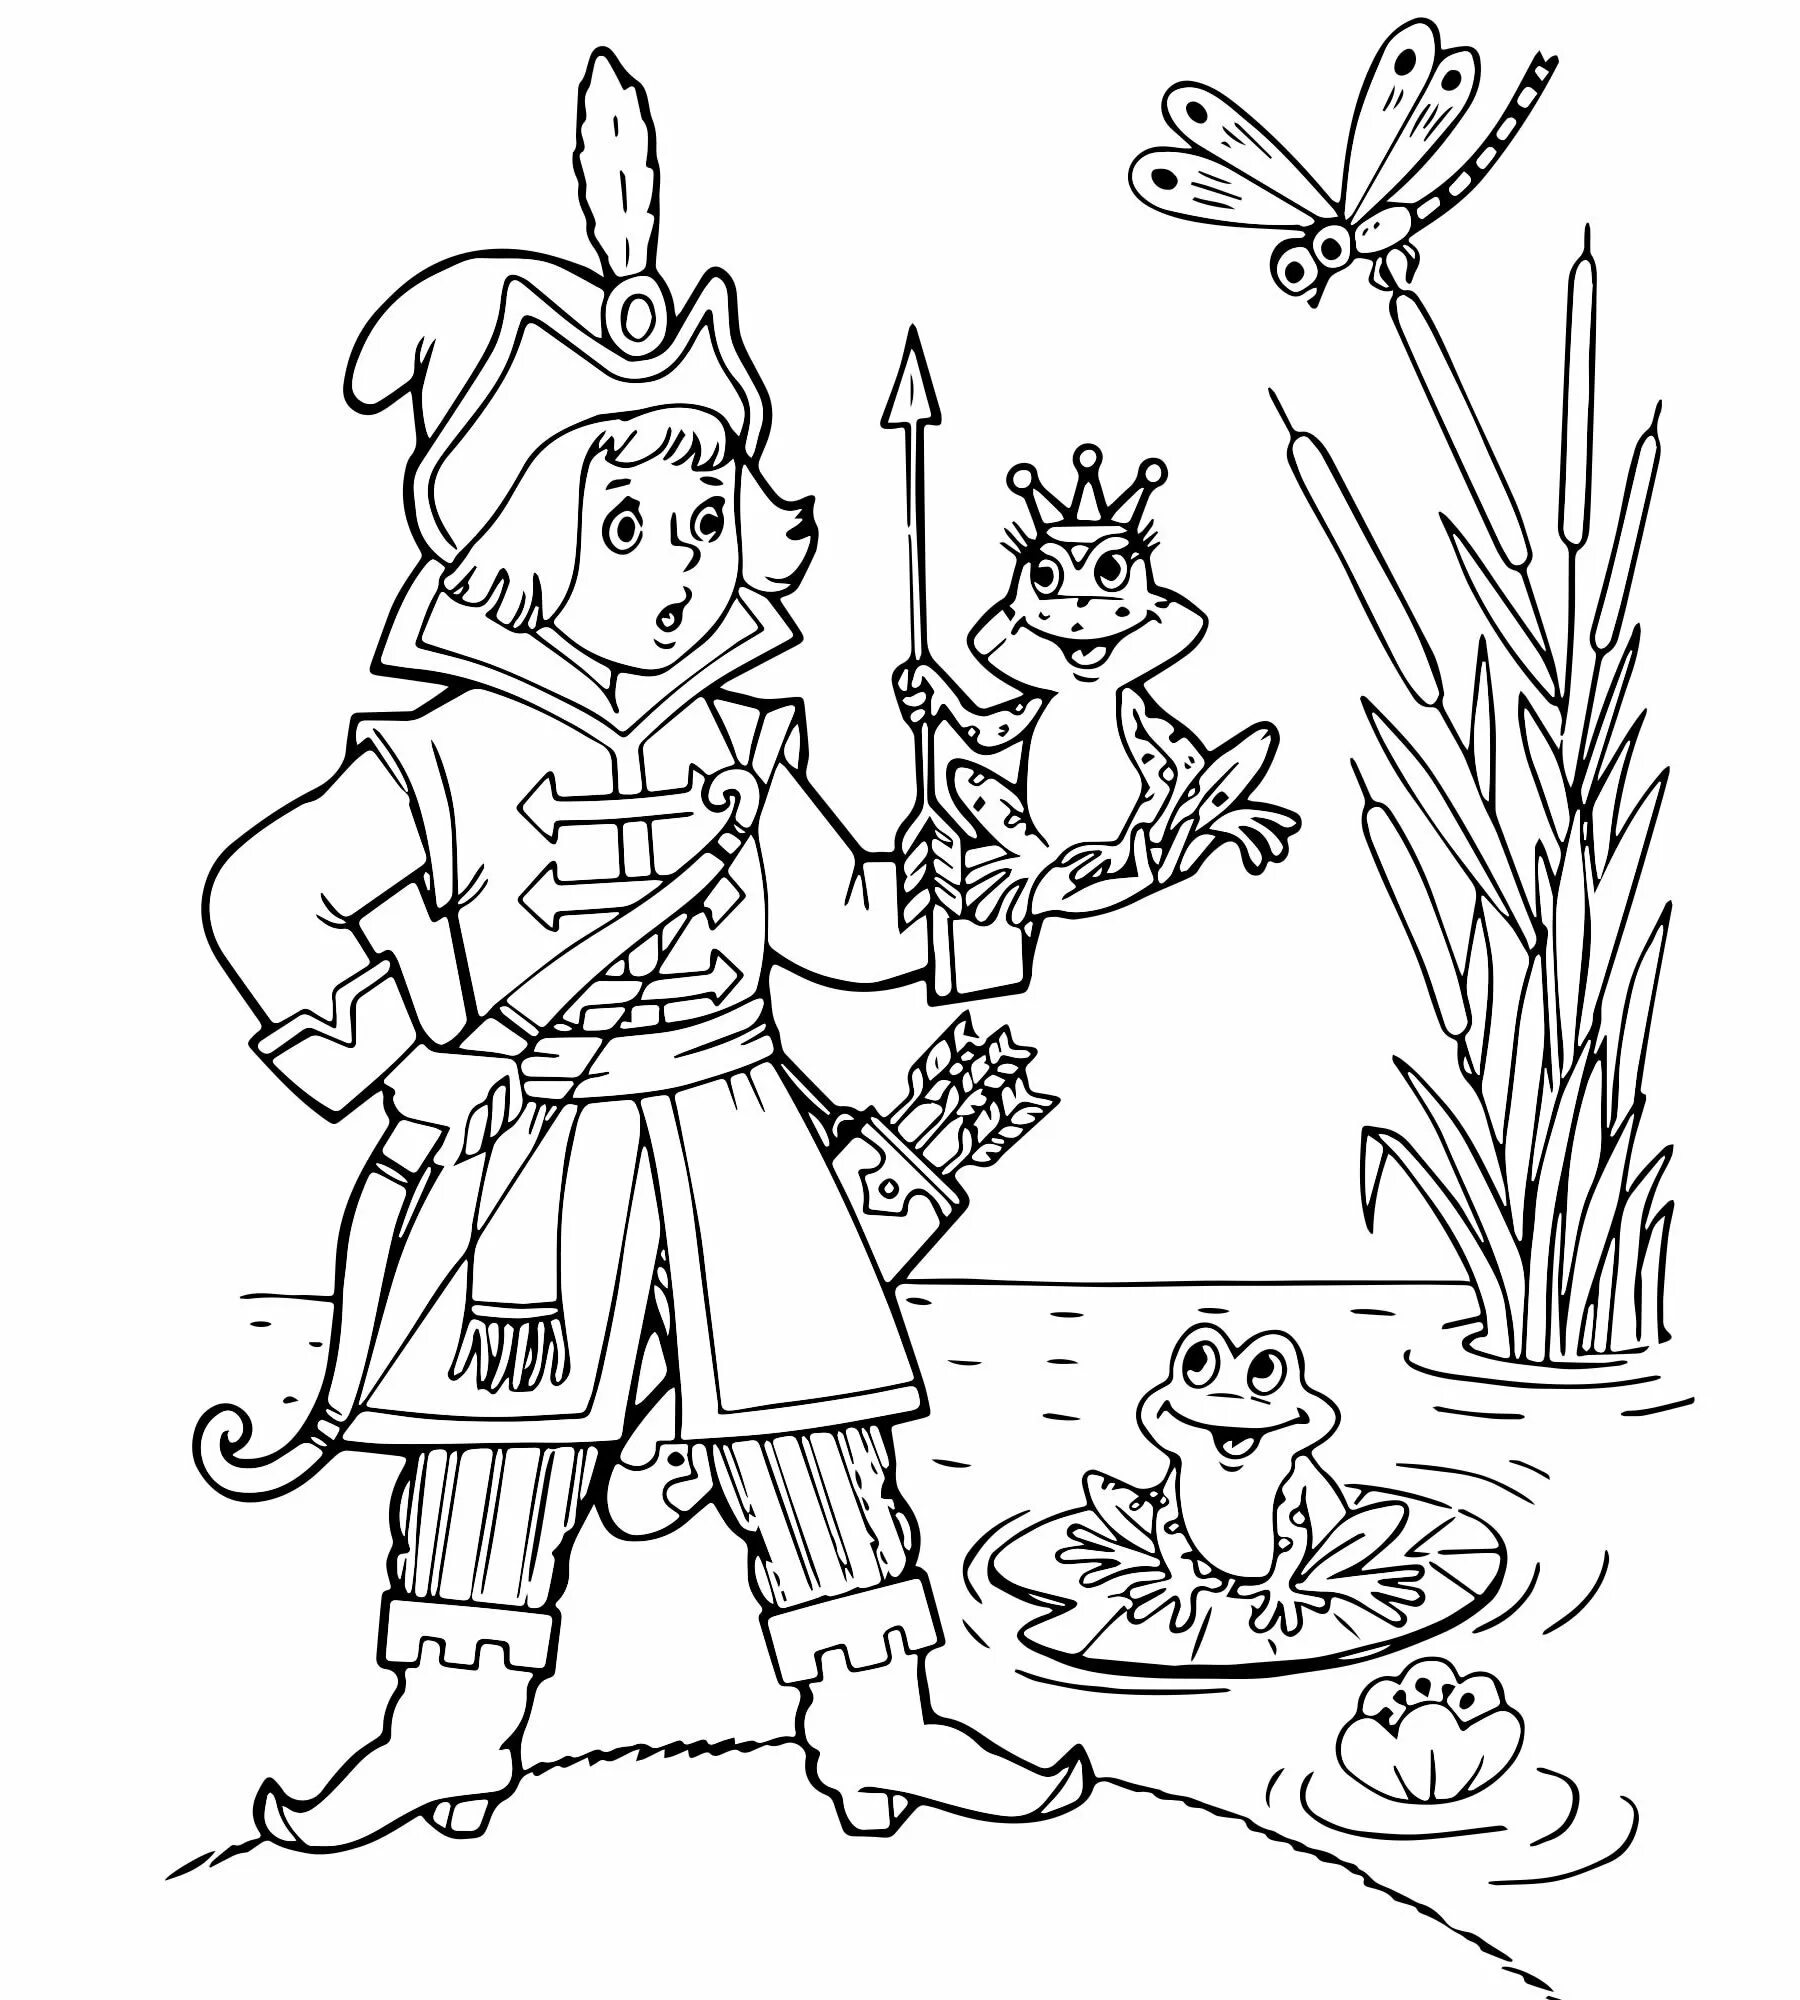 Царевна-лягушка сказка раскраска для детей. Раскраска по сказке Царевна лягушка для детей.